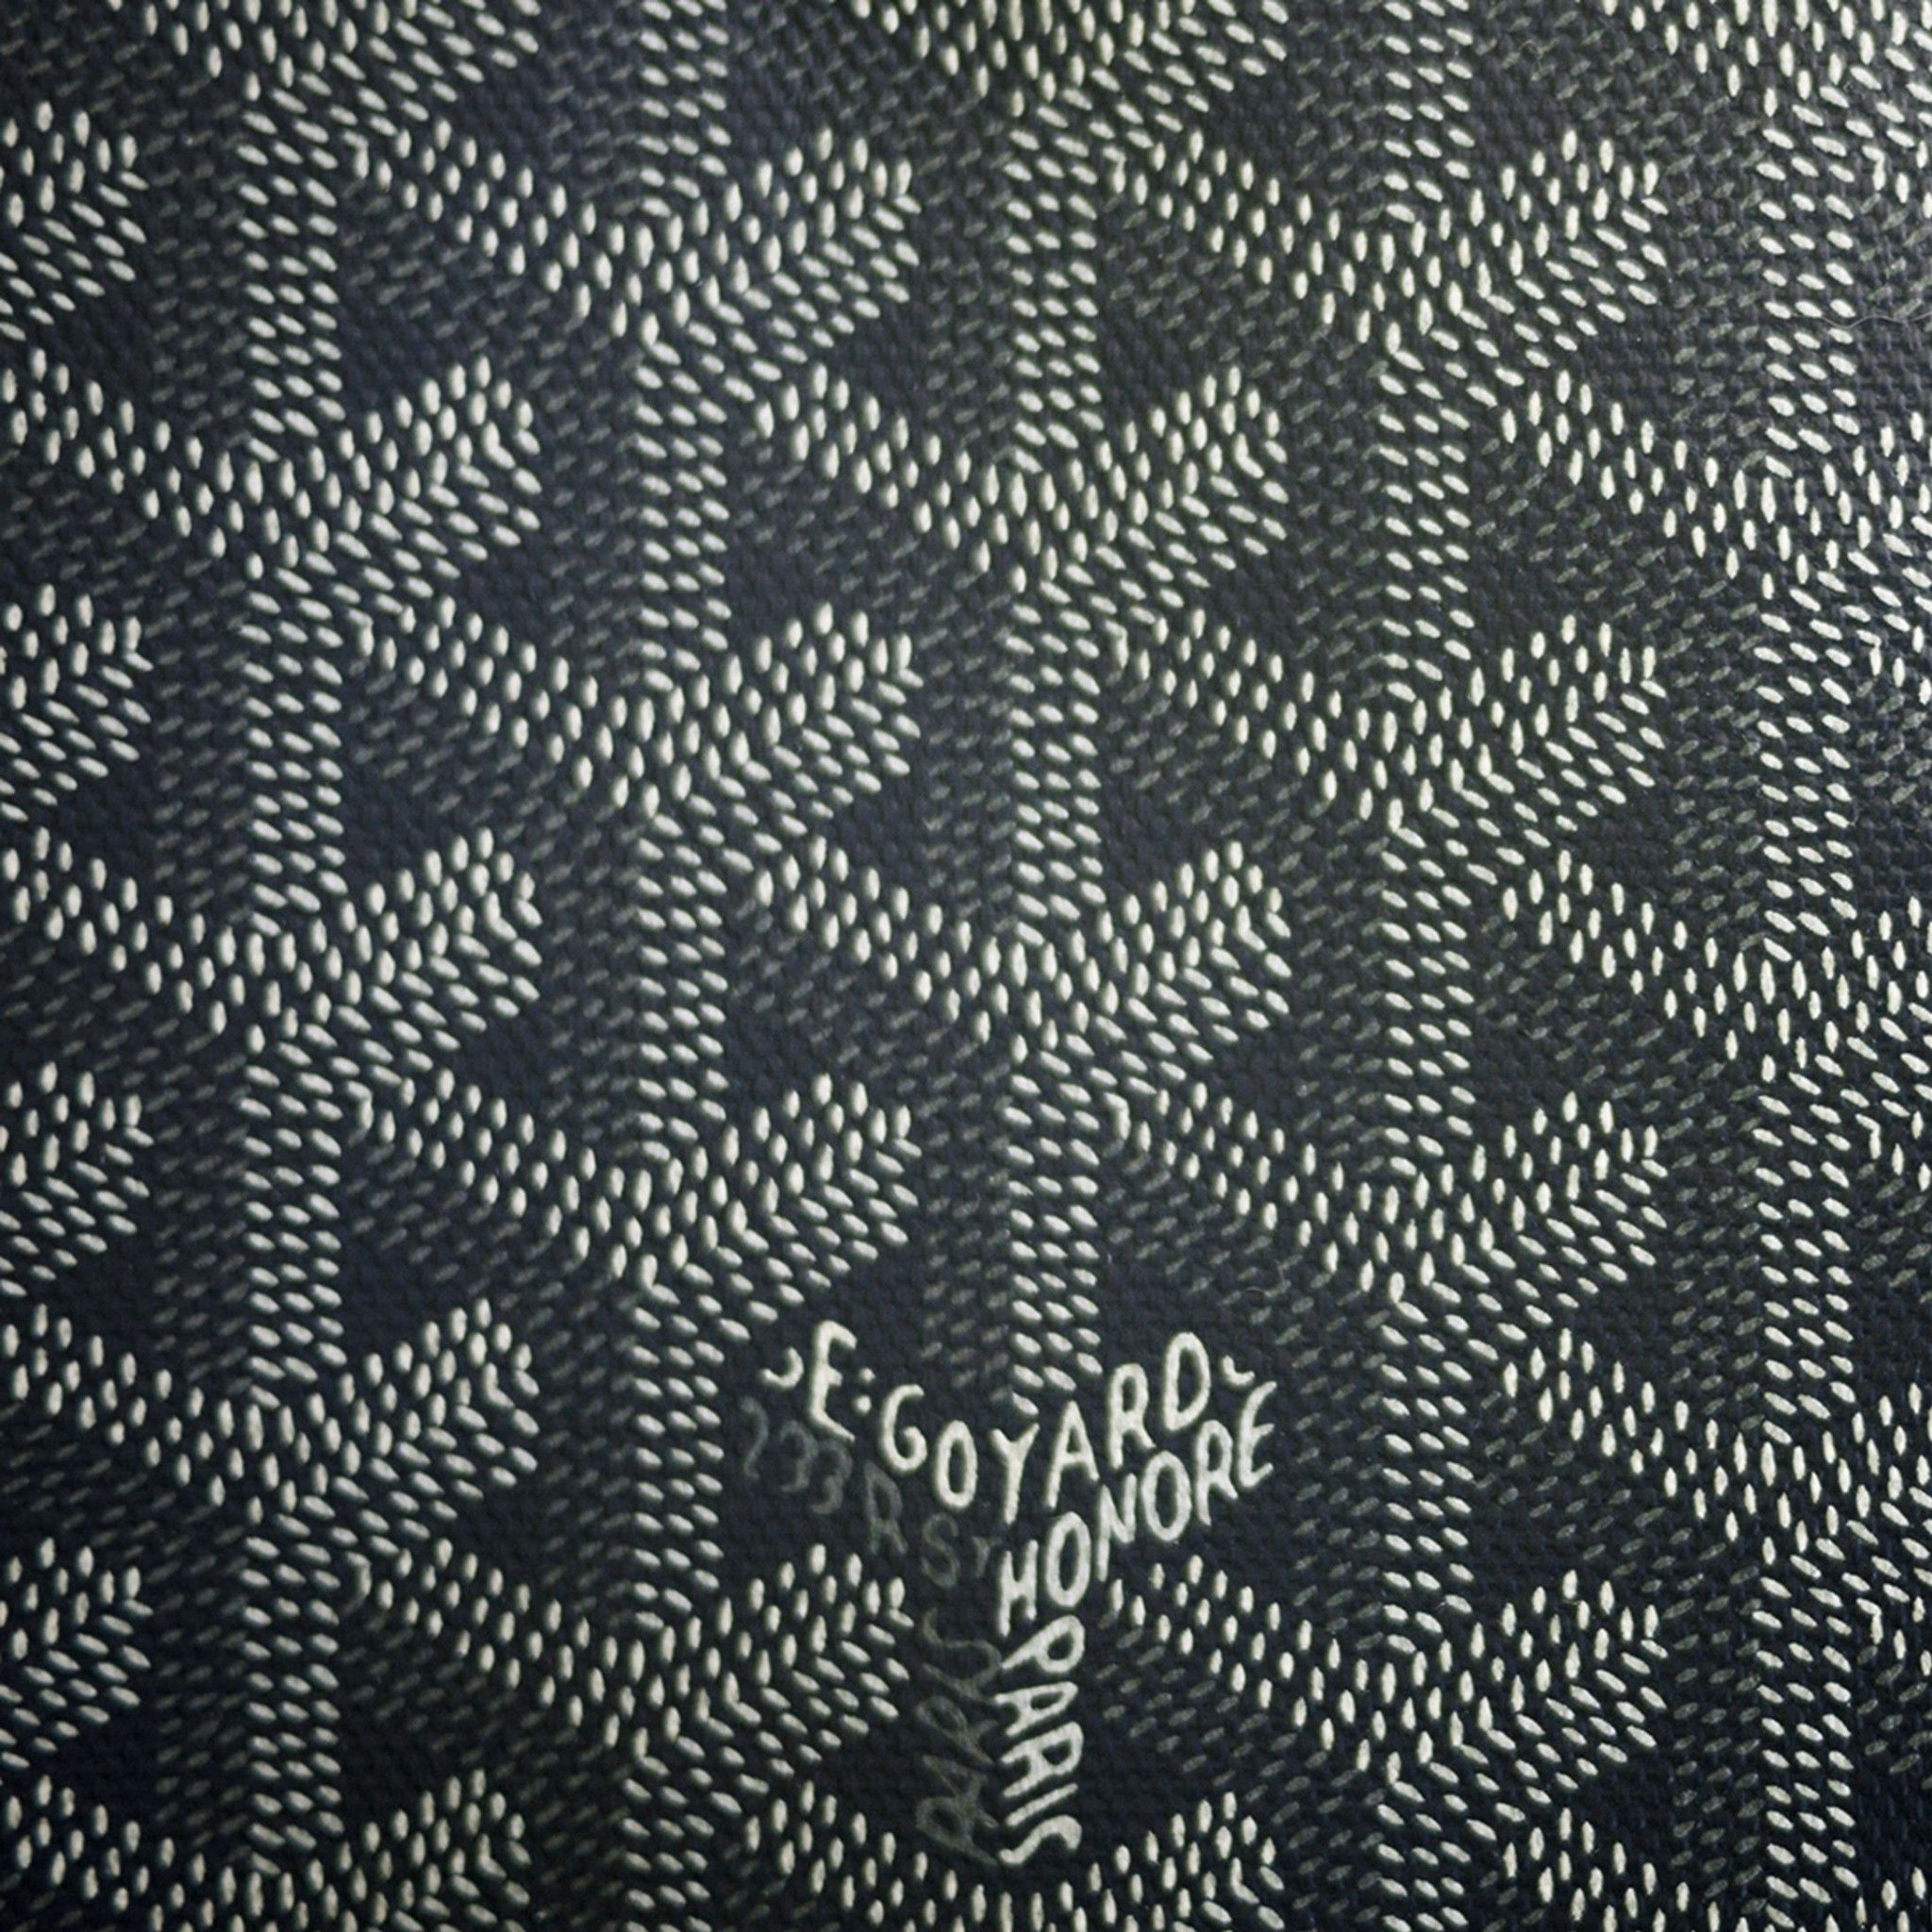 goyard iphone wallpaper,pattern,woven fabric,textile,design,weaving